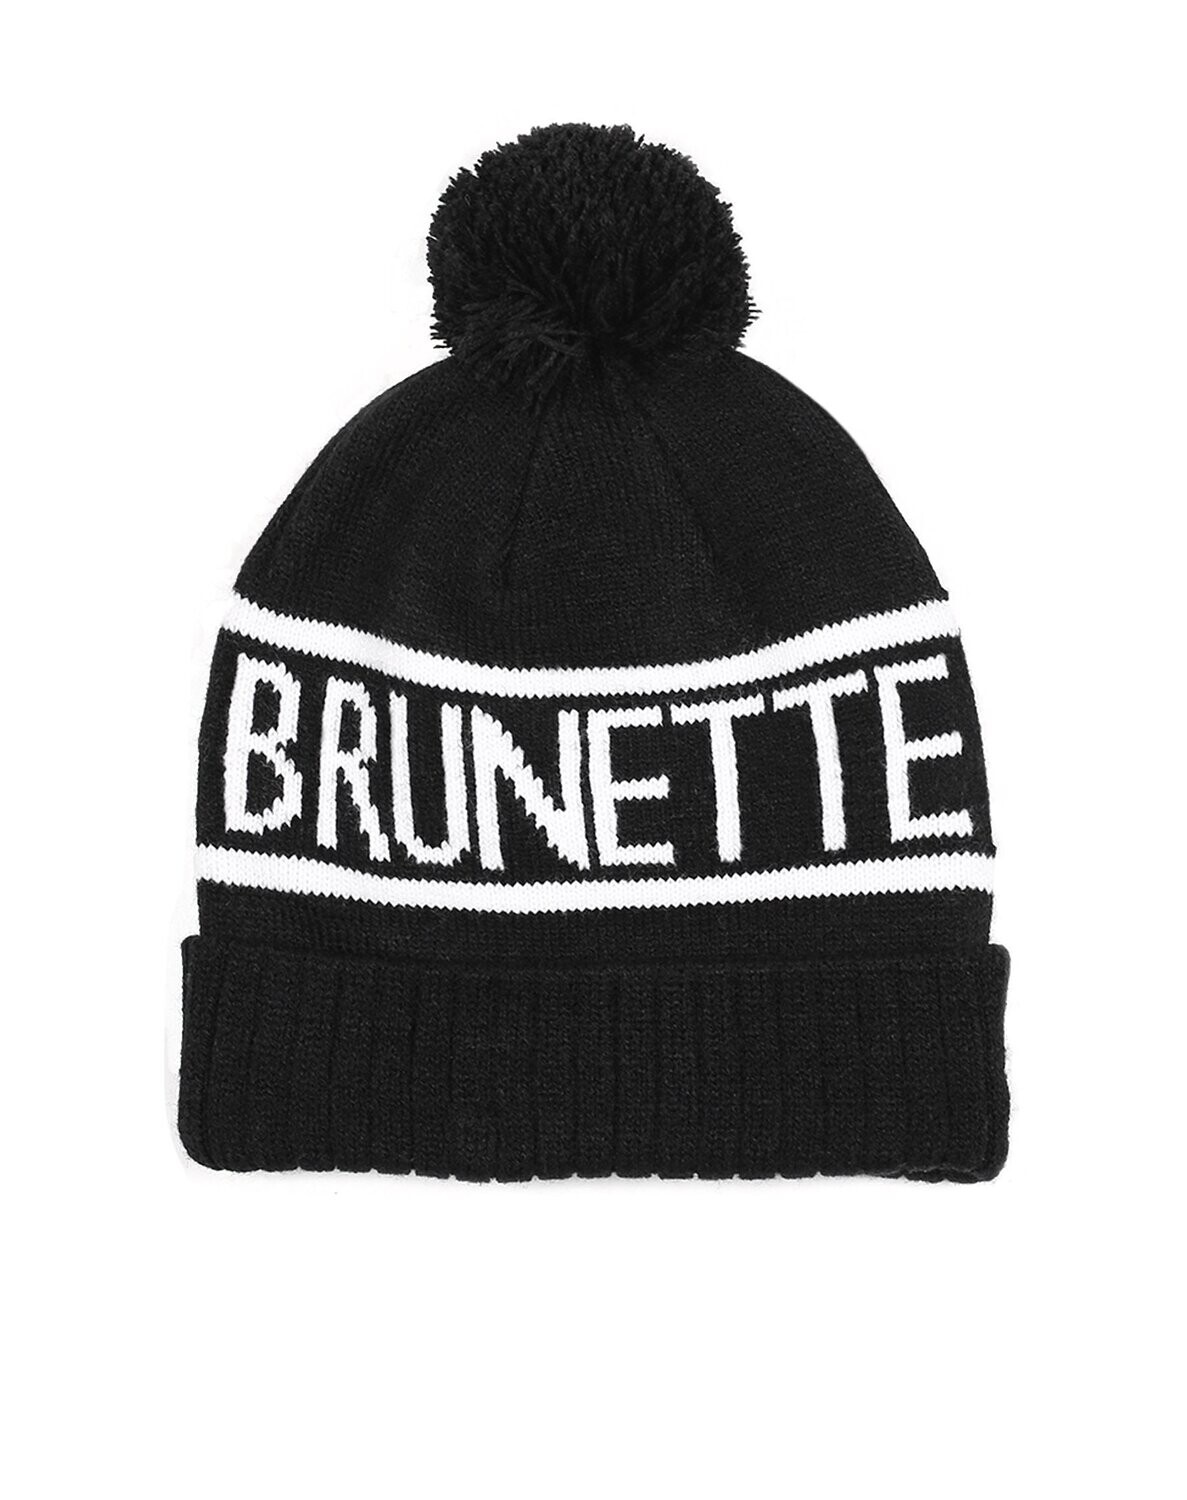 Brunette Toque Hat